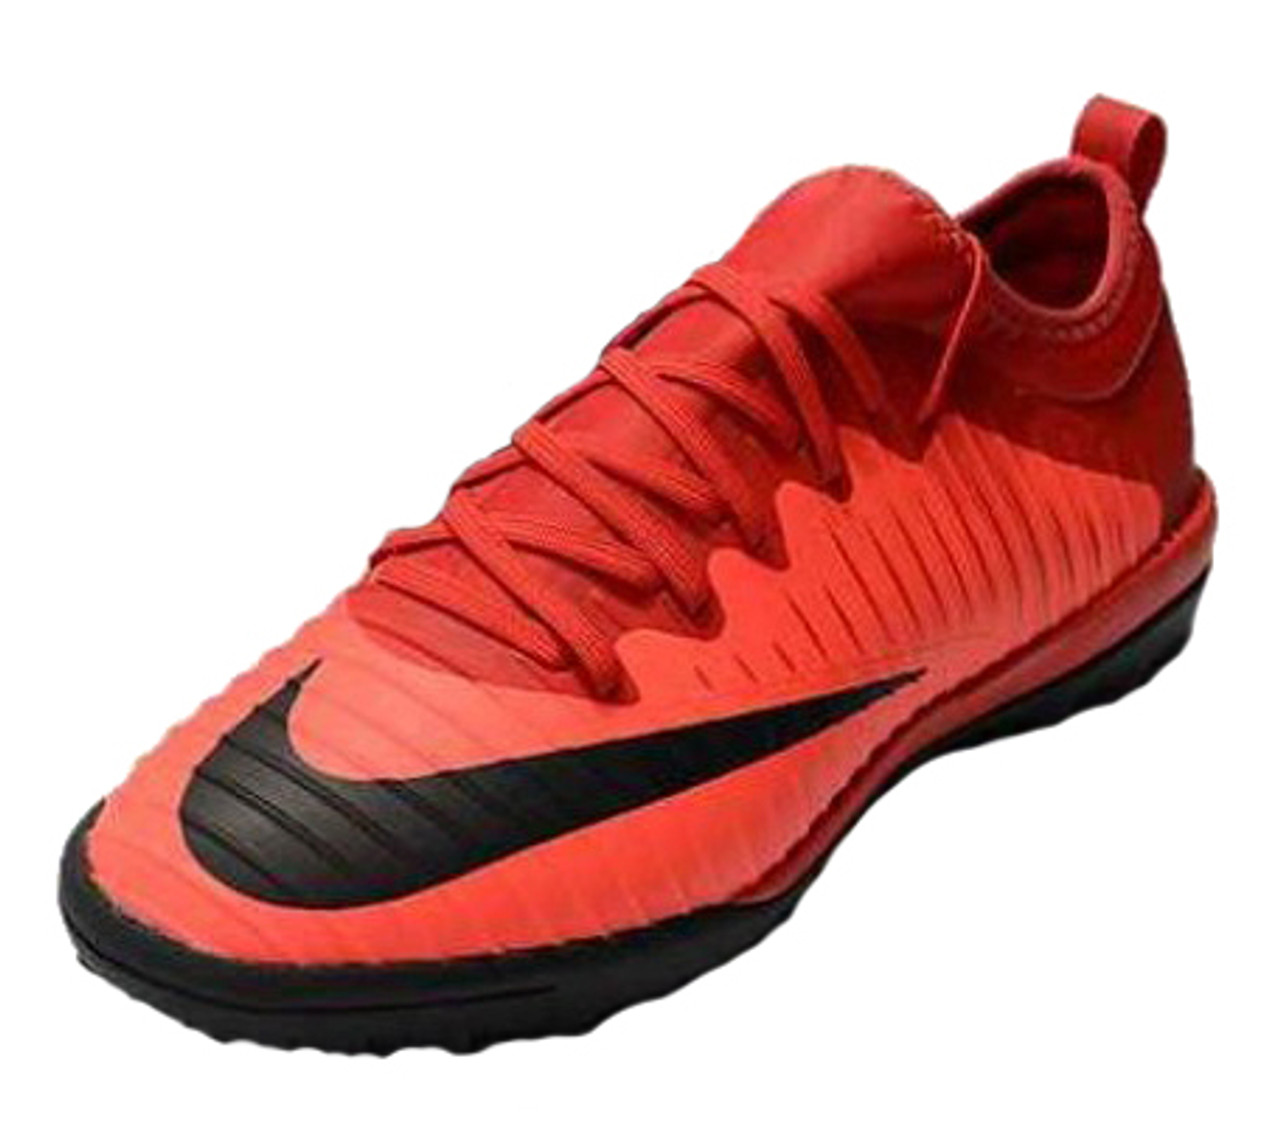 Nike MercurialX Finale II TF - University Red/Black SD (050420) - ohp soccer